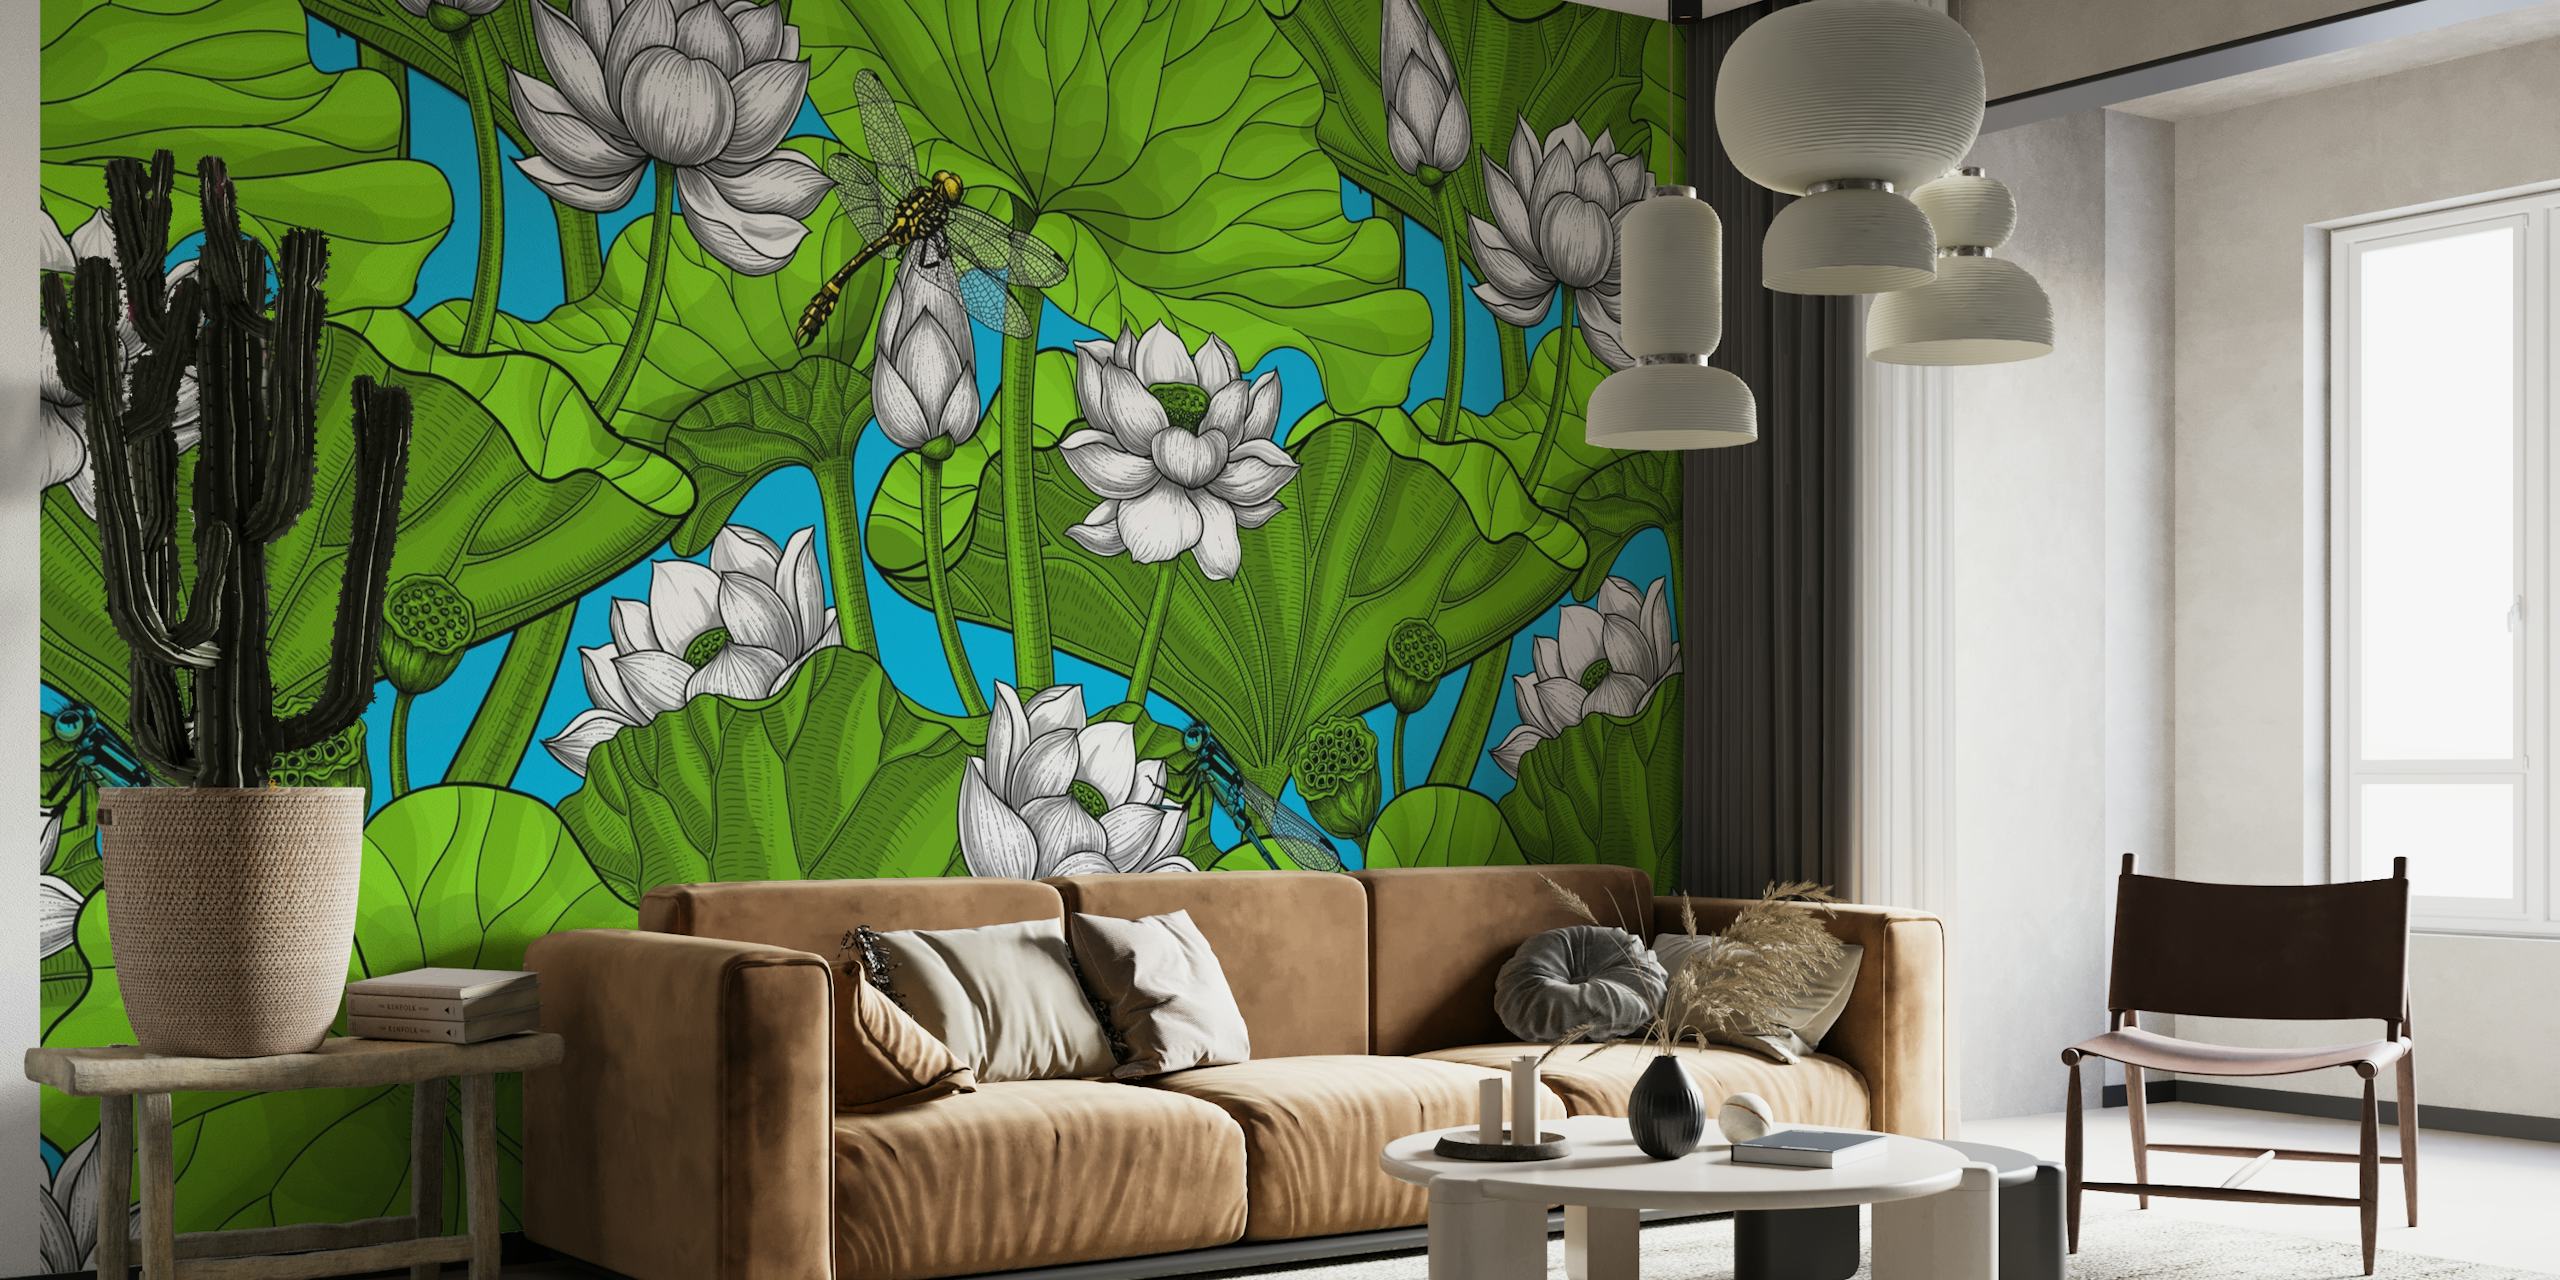 Lotus garden wallpaper